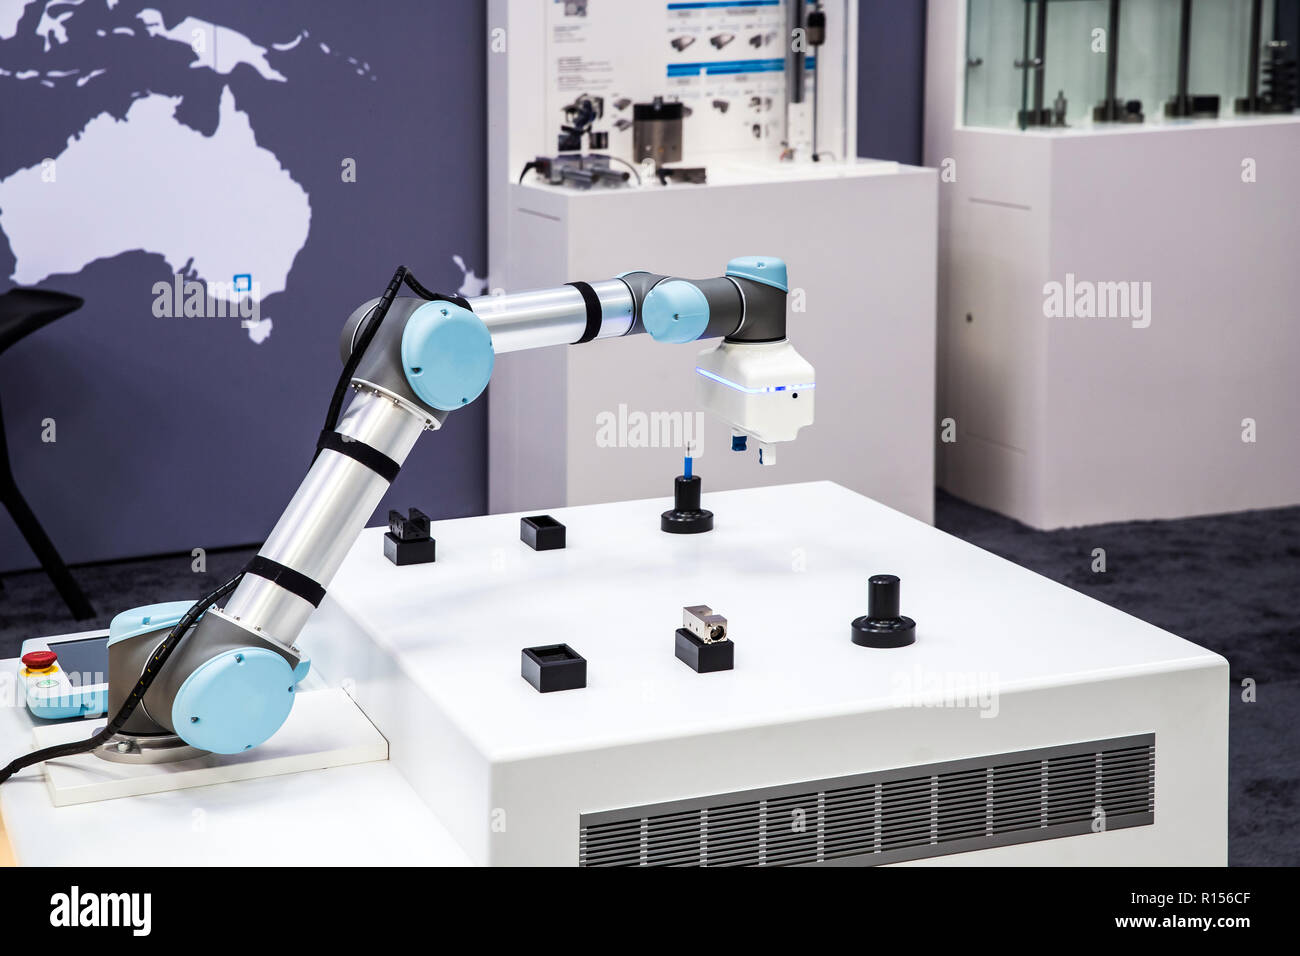 Universal robots arms Stock Photo